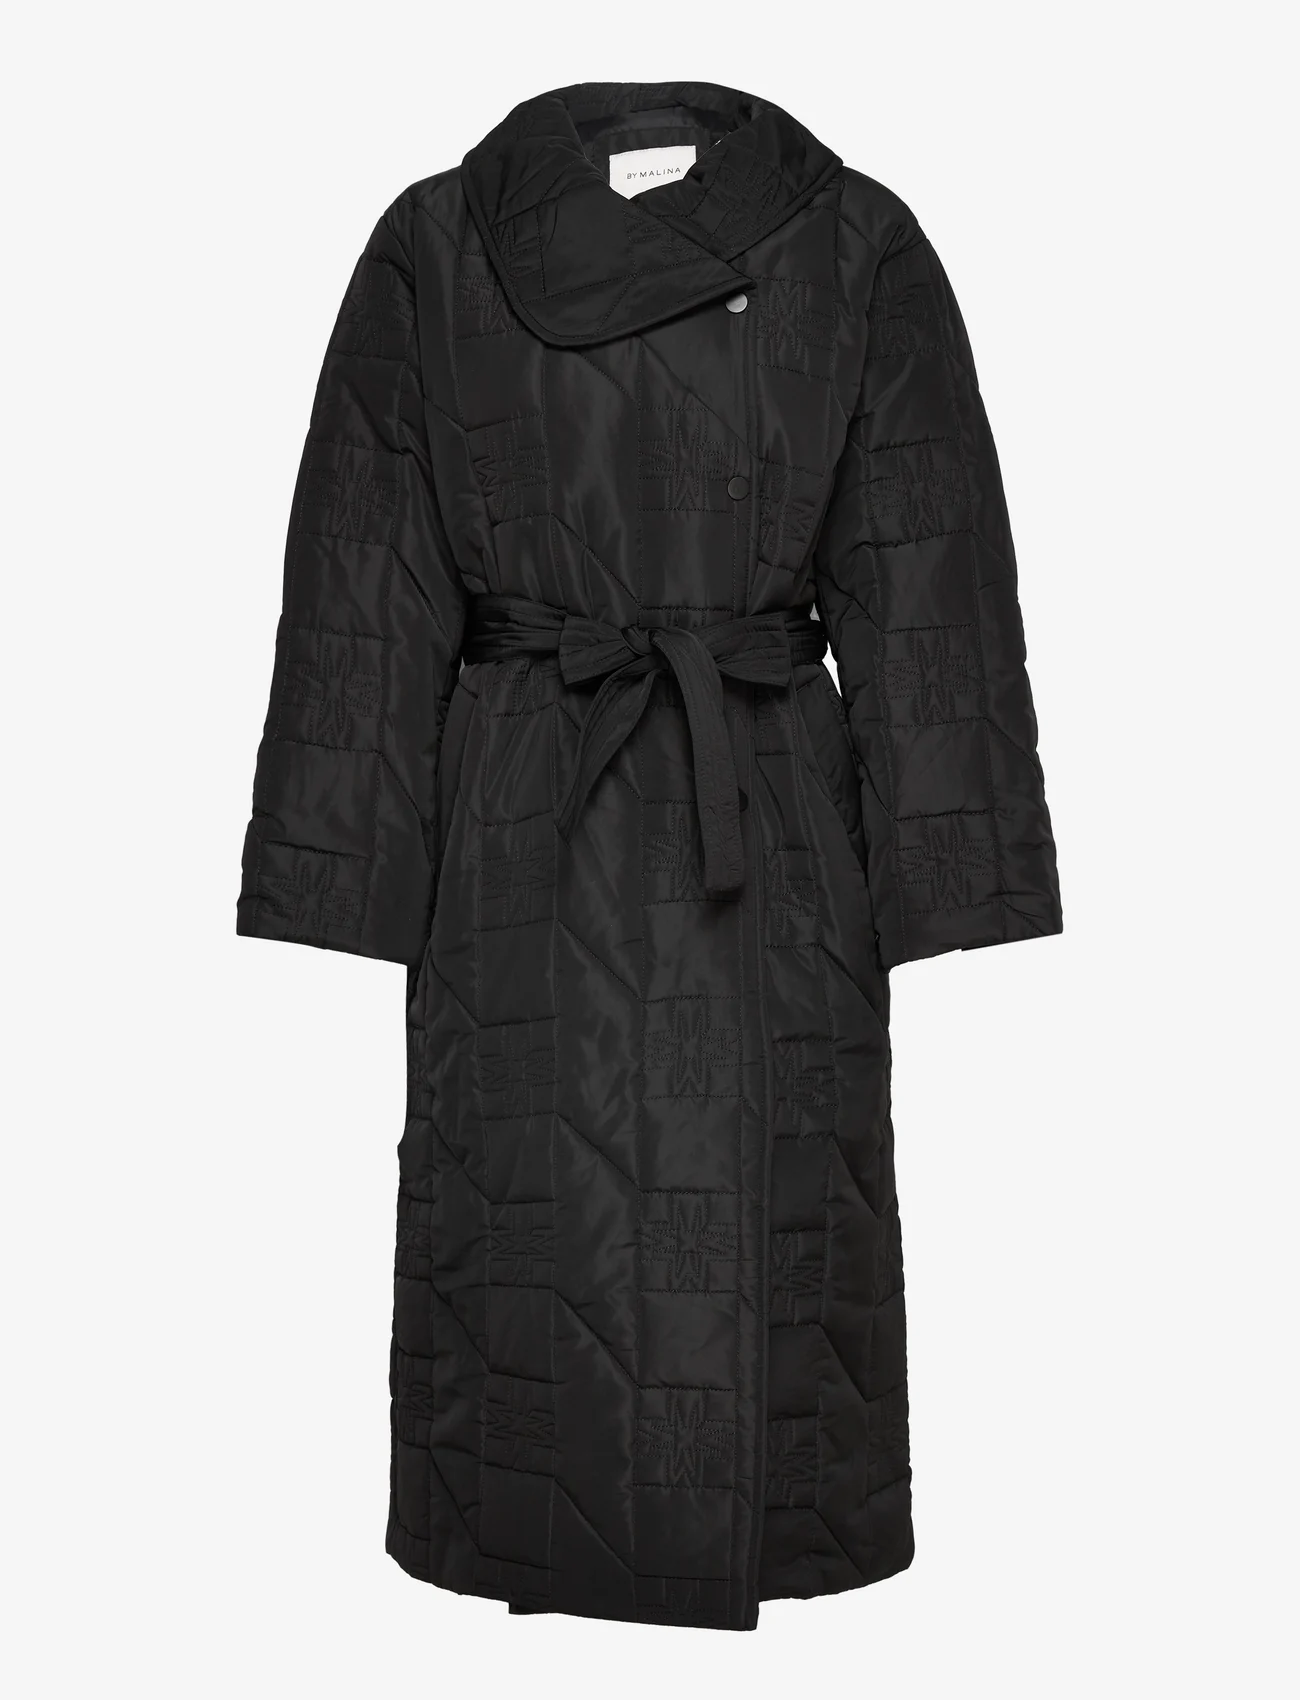 Malina - Lia Puffer Coat - kurtki zimowe - black iconic - 0